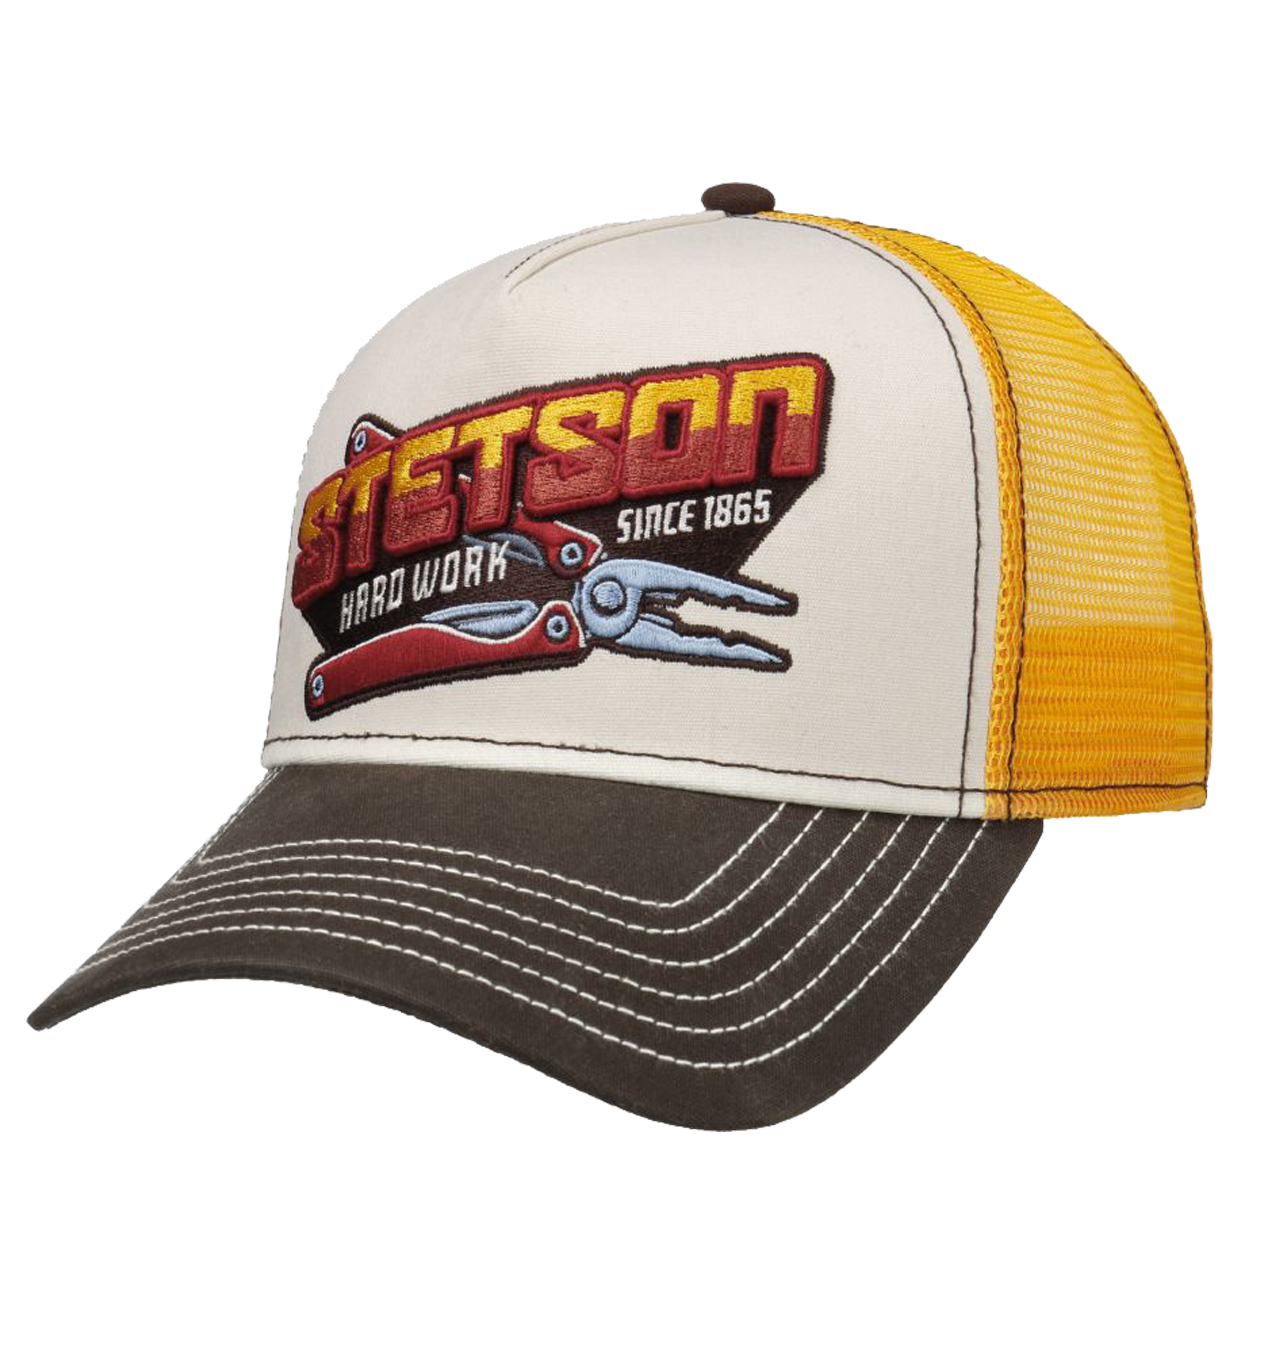 Stetson - Hard Work Trucker Cap - Yellow